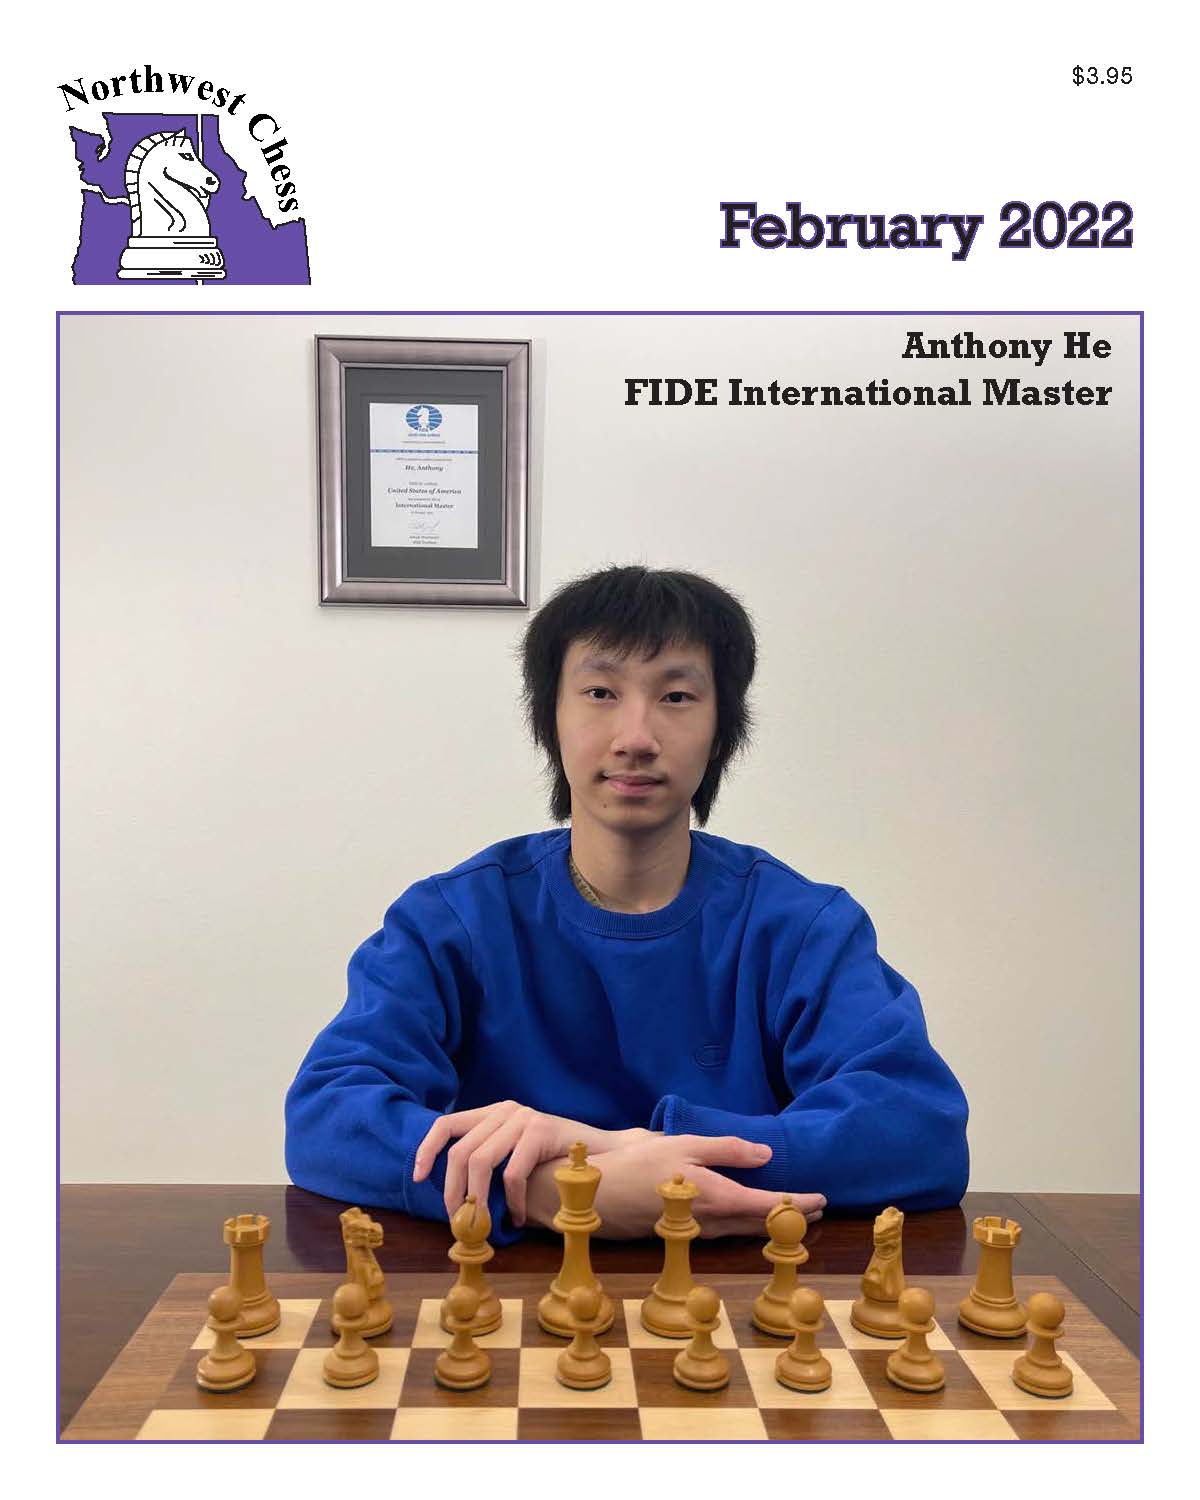 Chessbase Magazine №194: The Magazine for Professional Chess (SDVL) FREE  Download